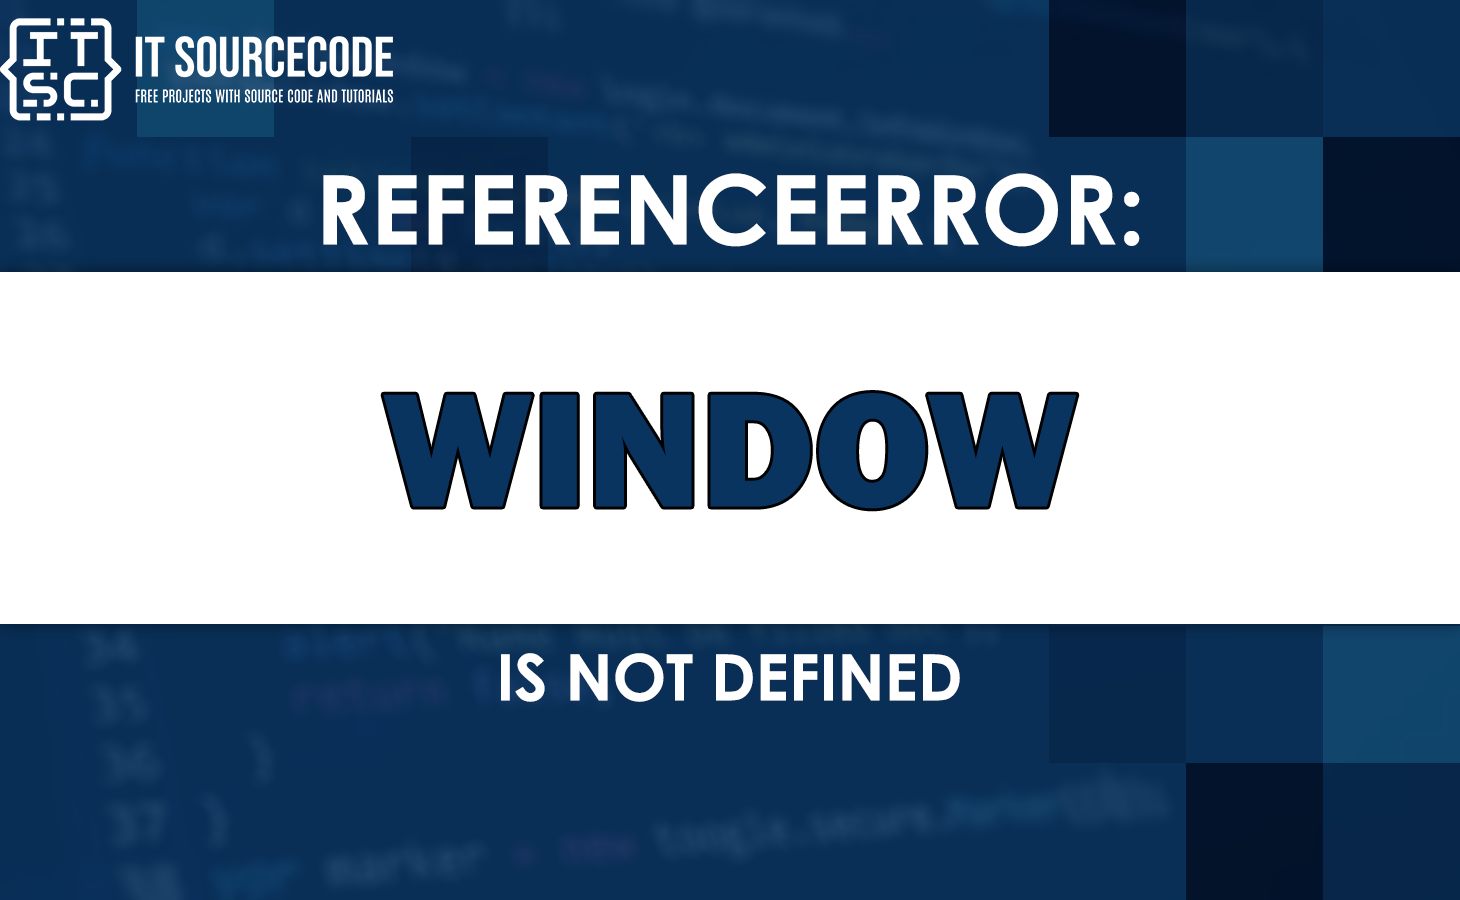 referenceerror window is not defined